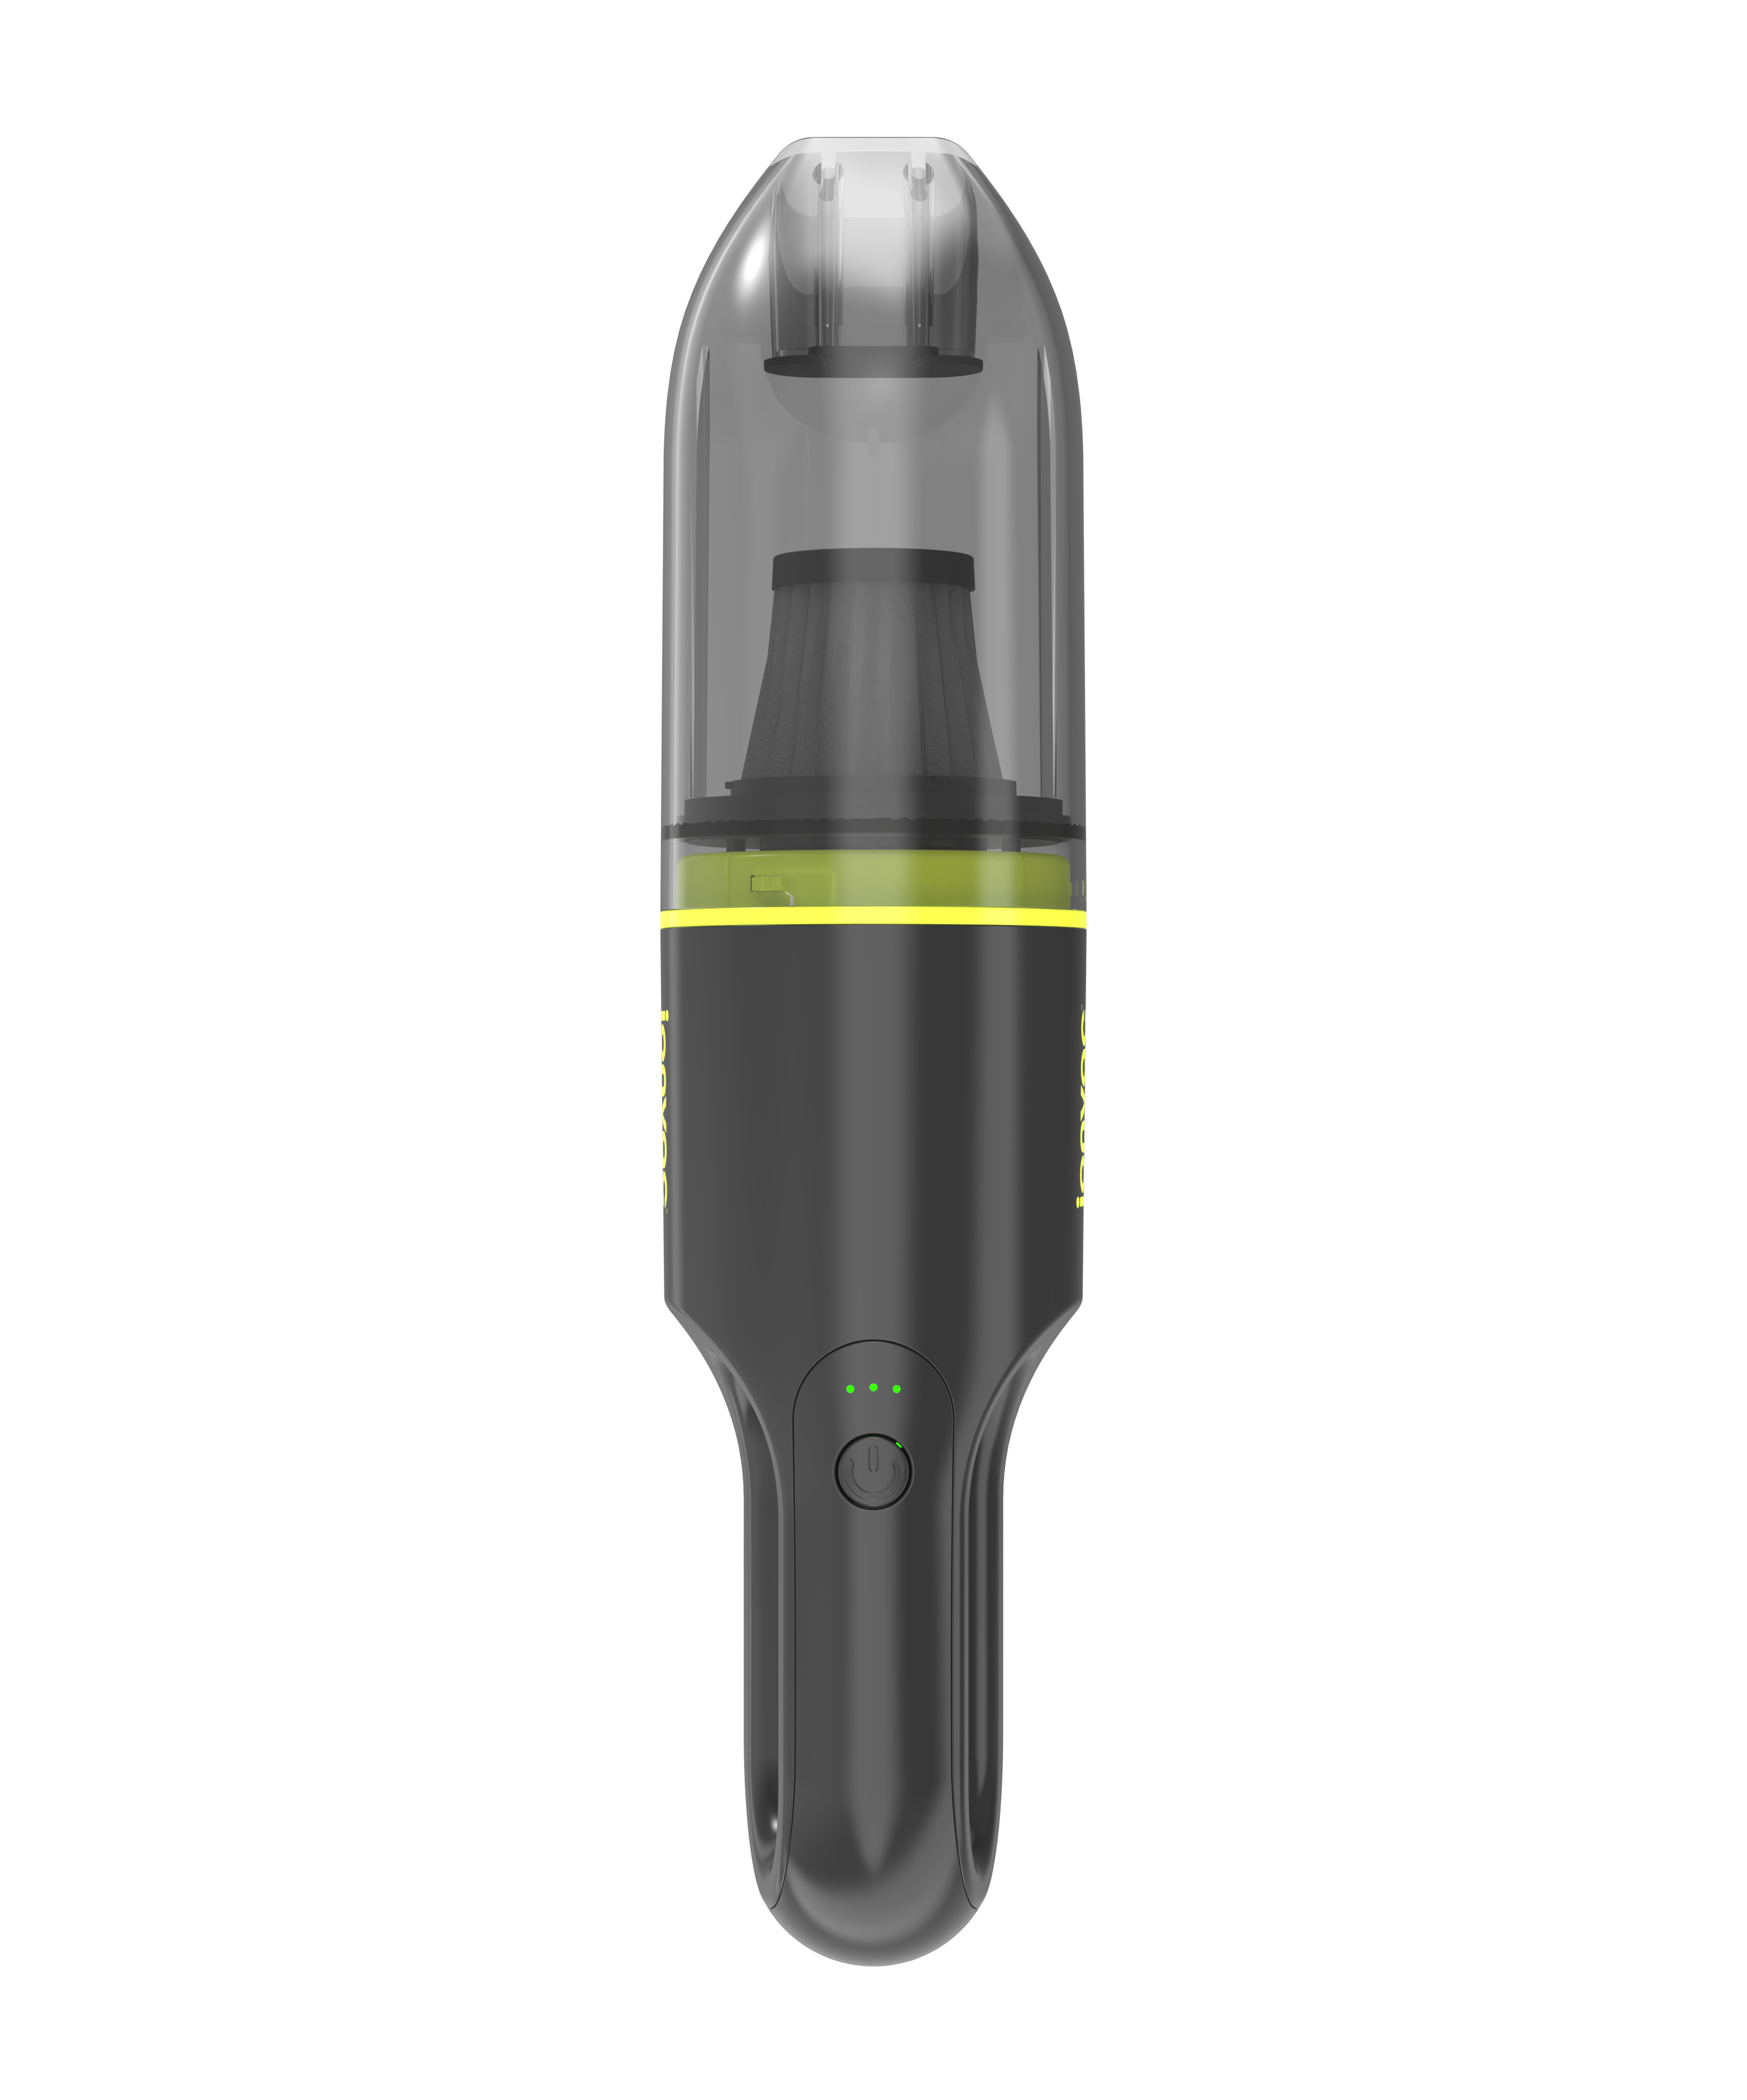 IonVac, Lightweight Handheld Cordless Vacuum Cleaner, USB Charging, Multi-Surface, New - image 4 of 13